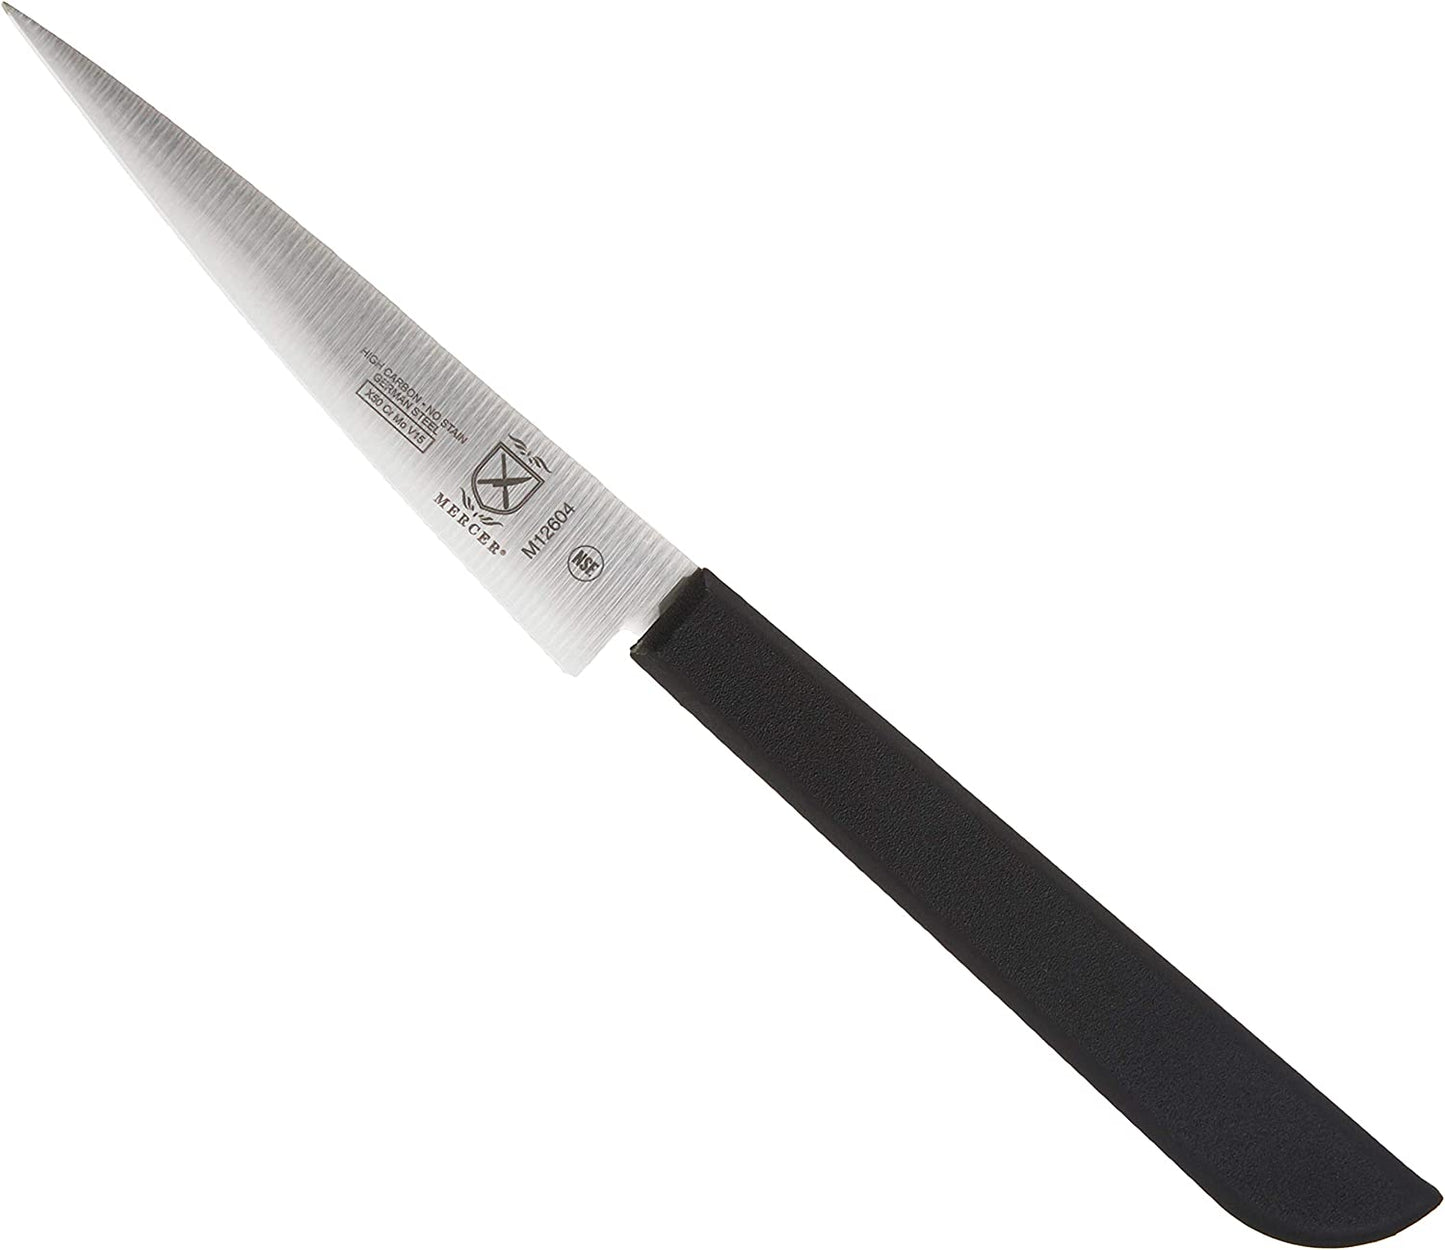 Thai Carving Knife, 5 Inch, Black